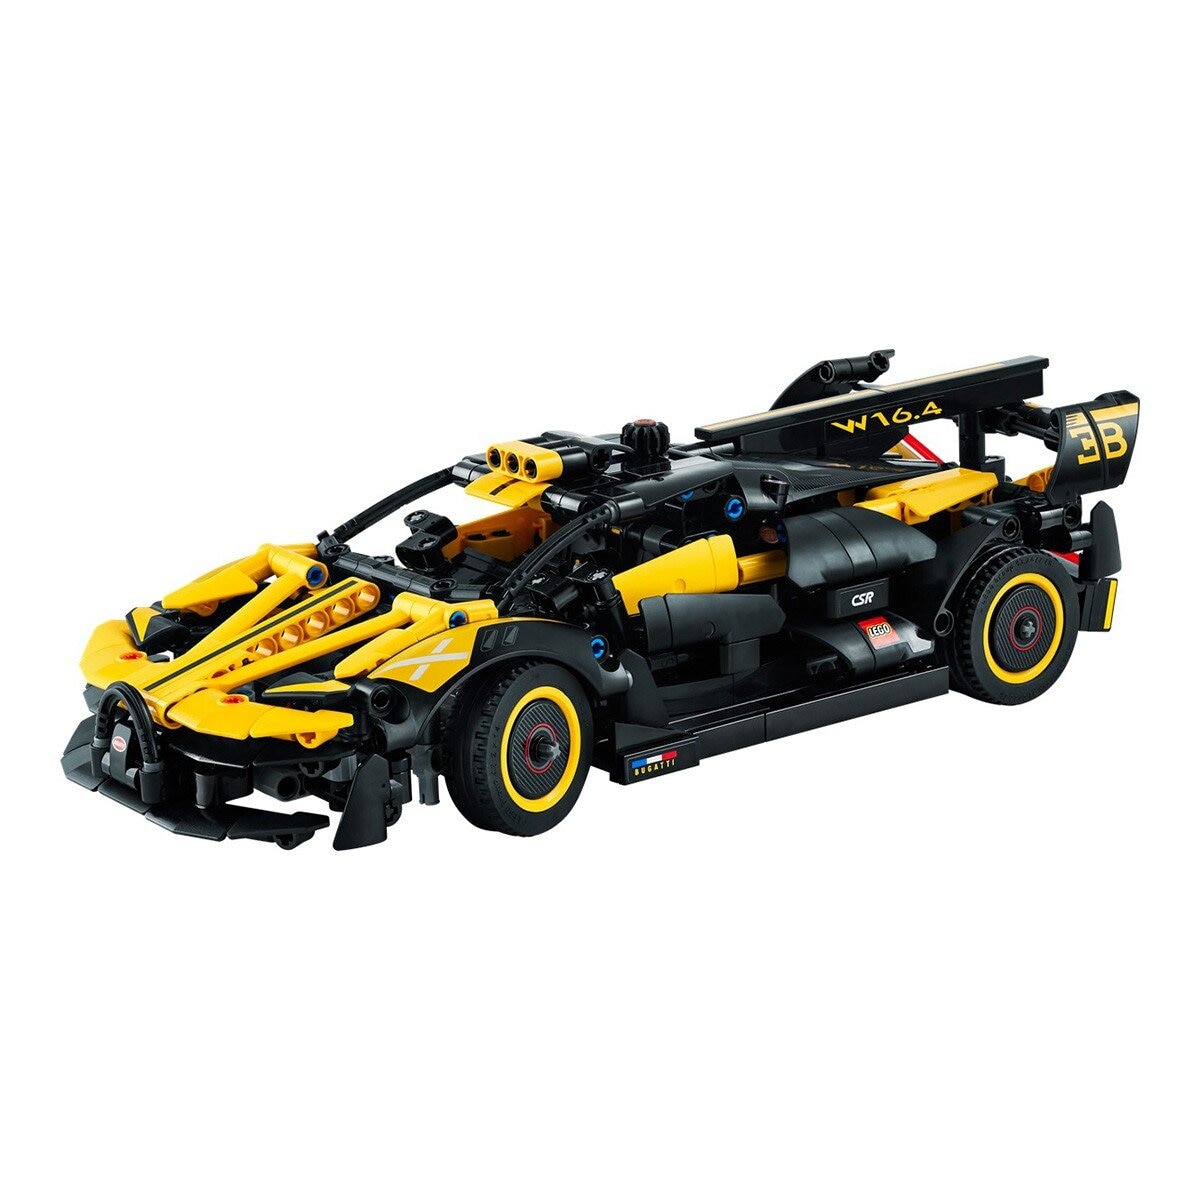 LEGO 科技系列 Bugatti Bolide 賽車 42151